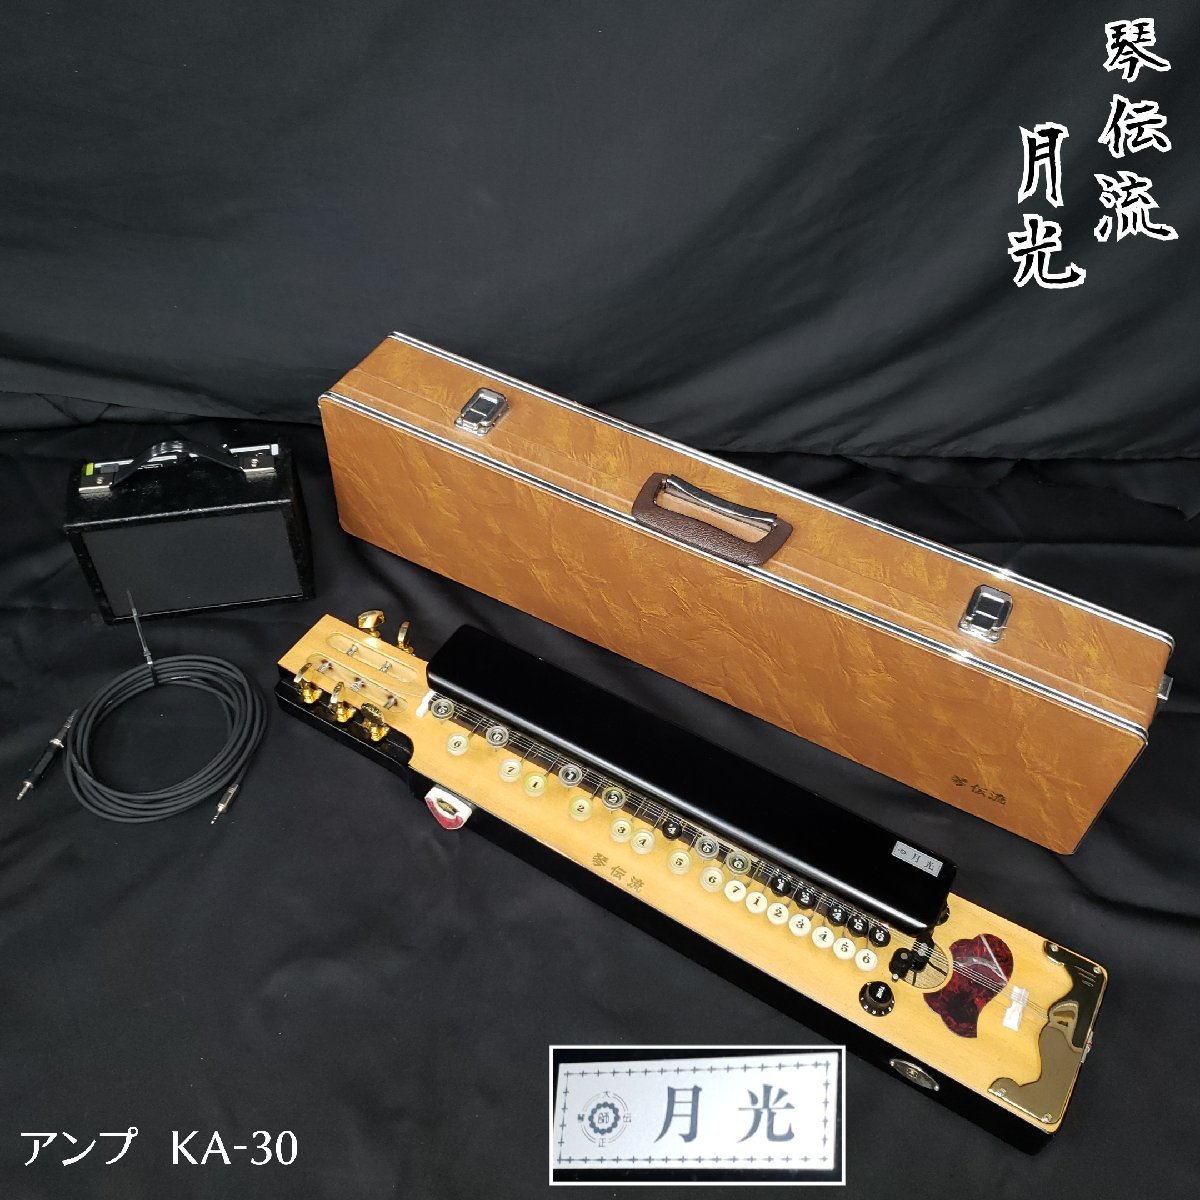 大正琴月光琴伝流アンプセットKA-30 通電確認弦楽器和楽器日本琴楽器